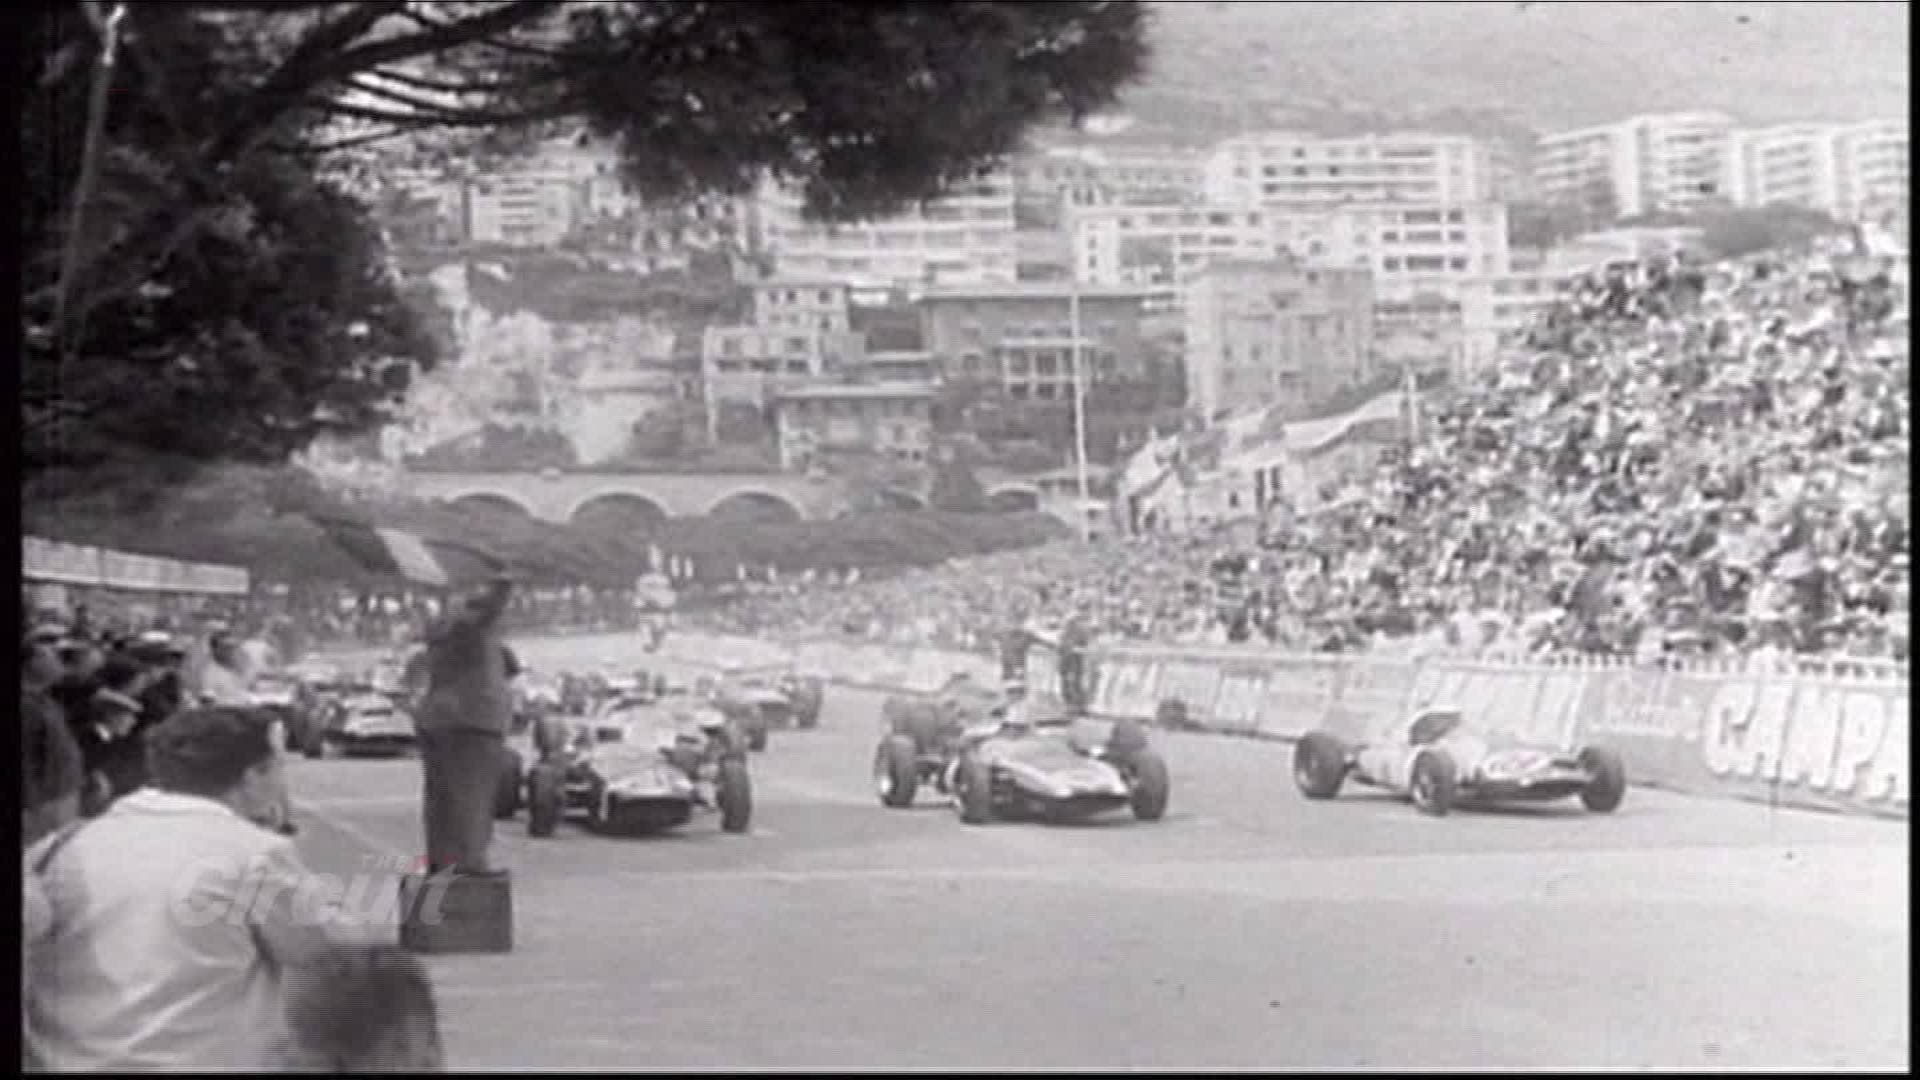 Monaco Grand Prix Reactions - The Ringer